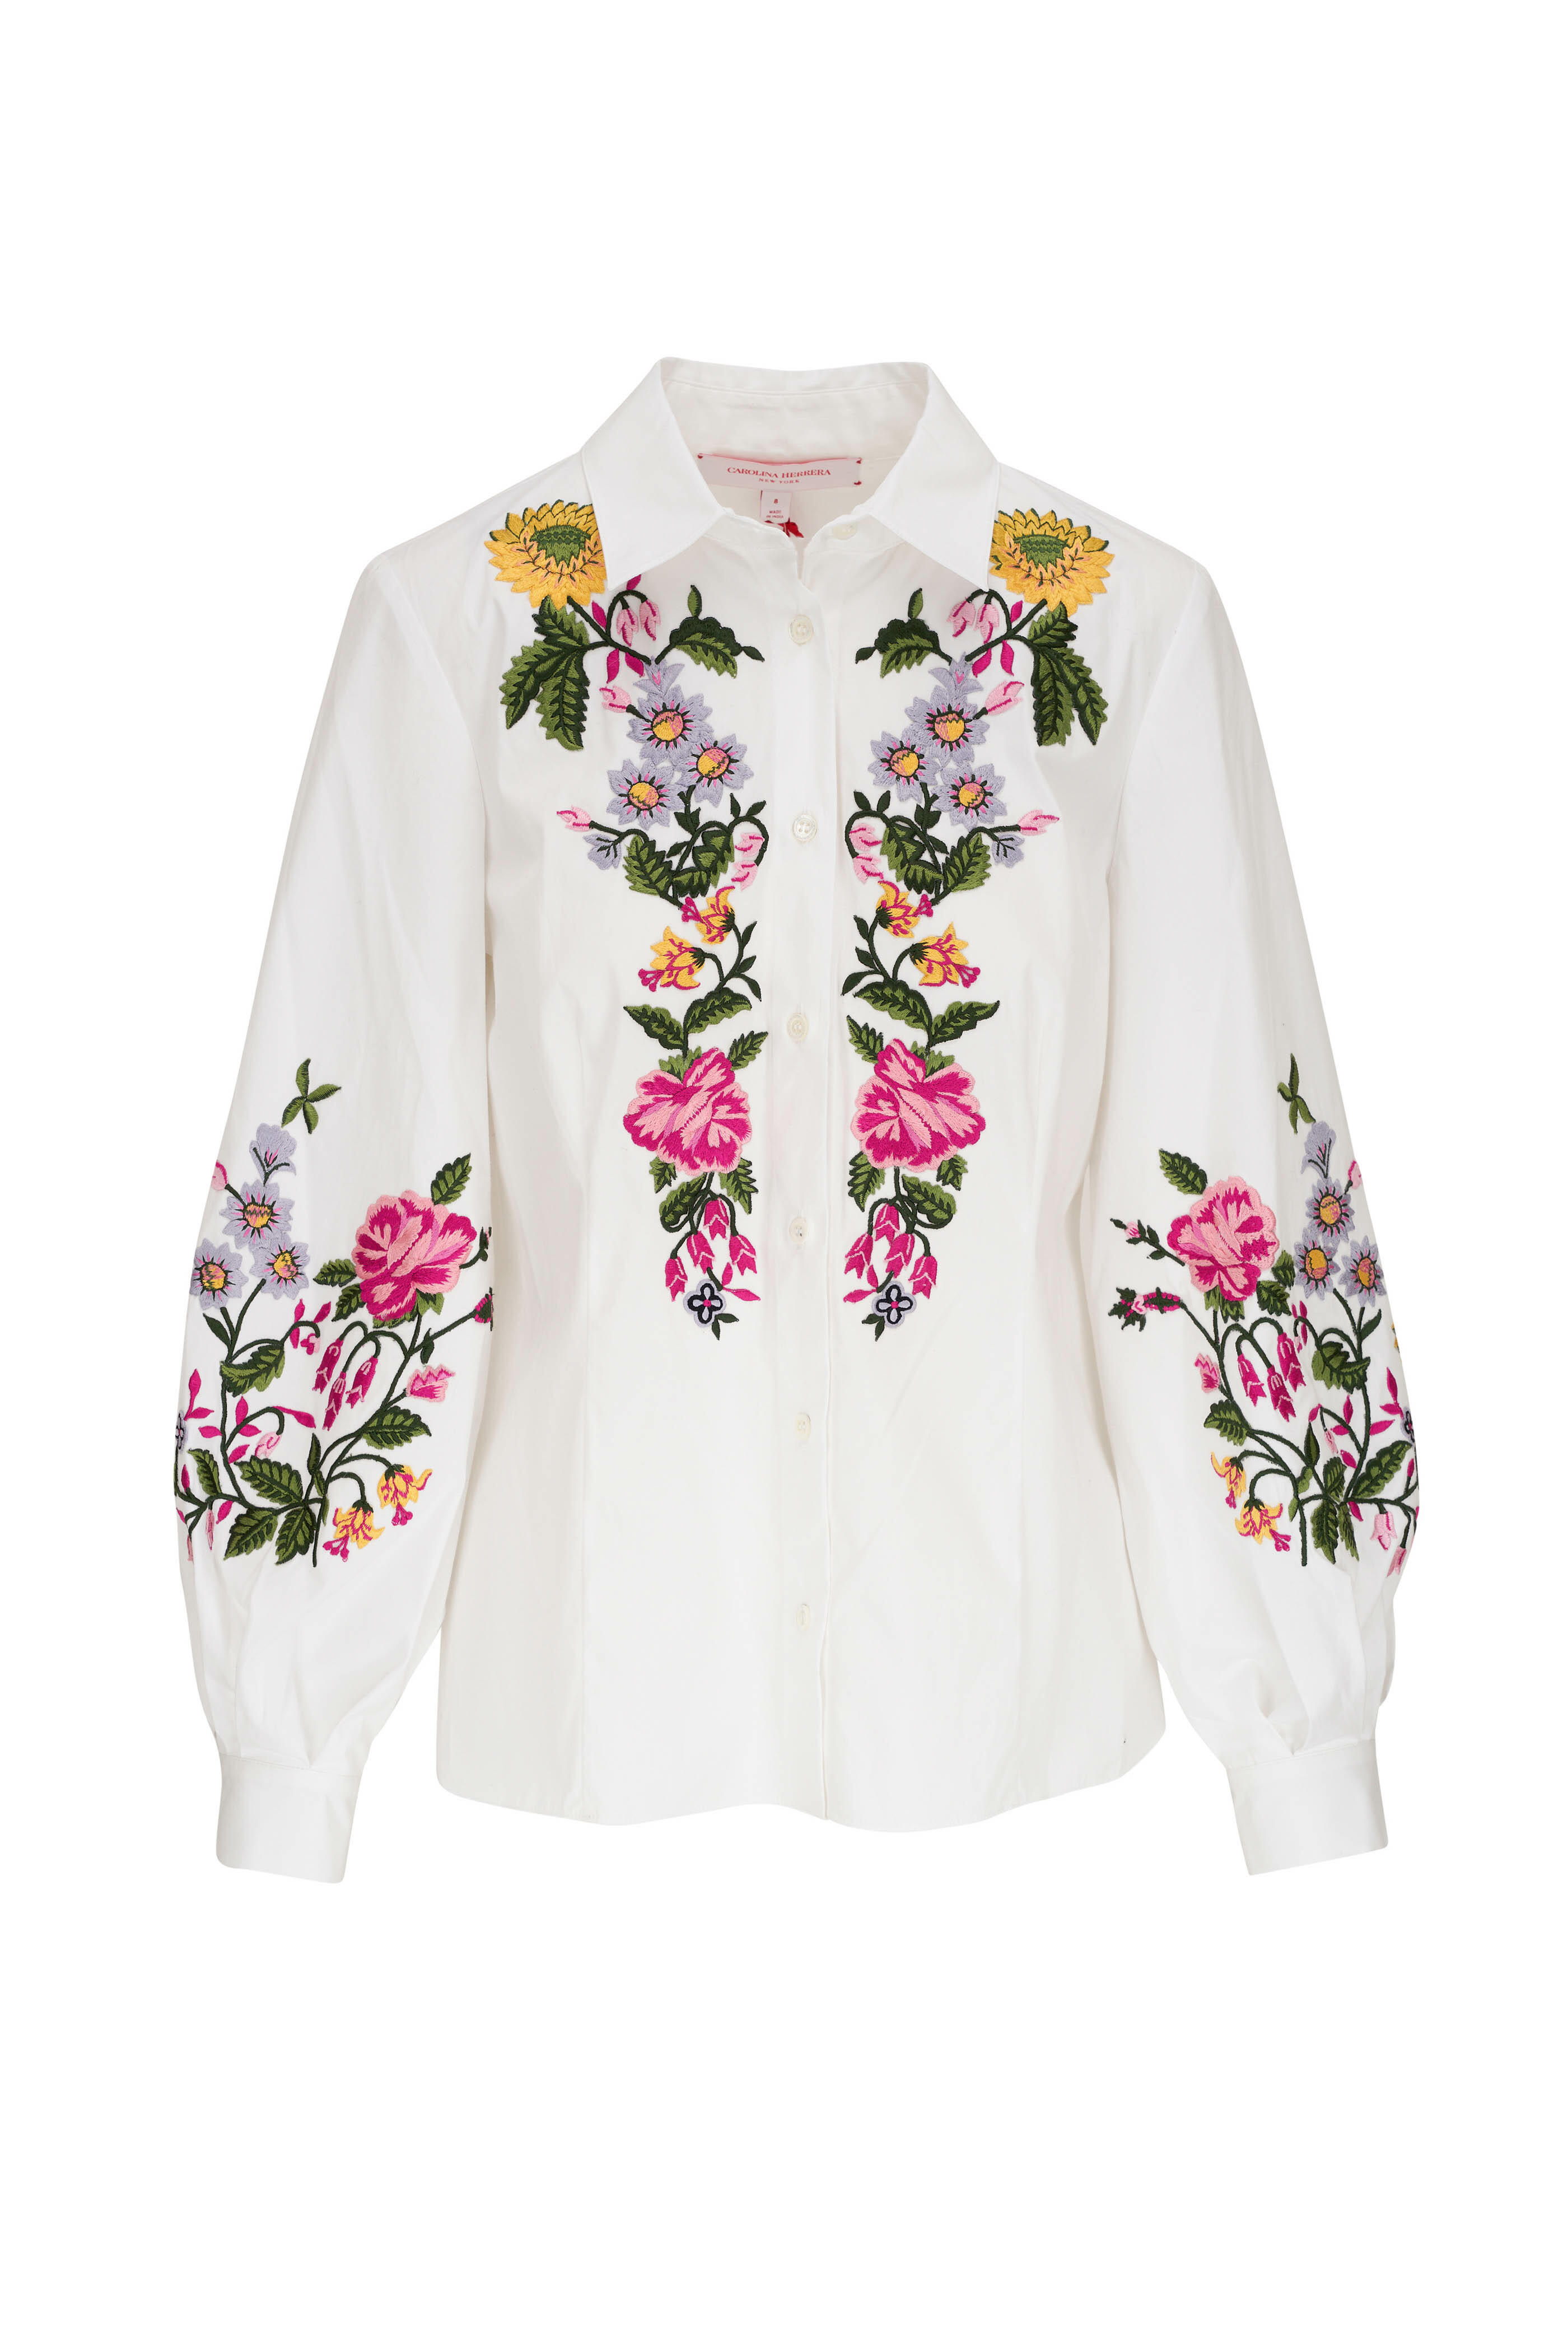 Carolina Herrera - White Multi Floral Embroidered Puff Sleeve Blouse